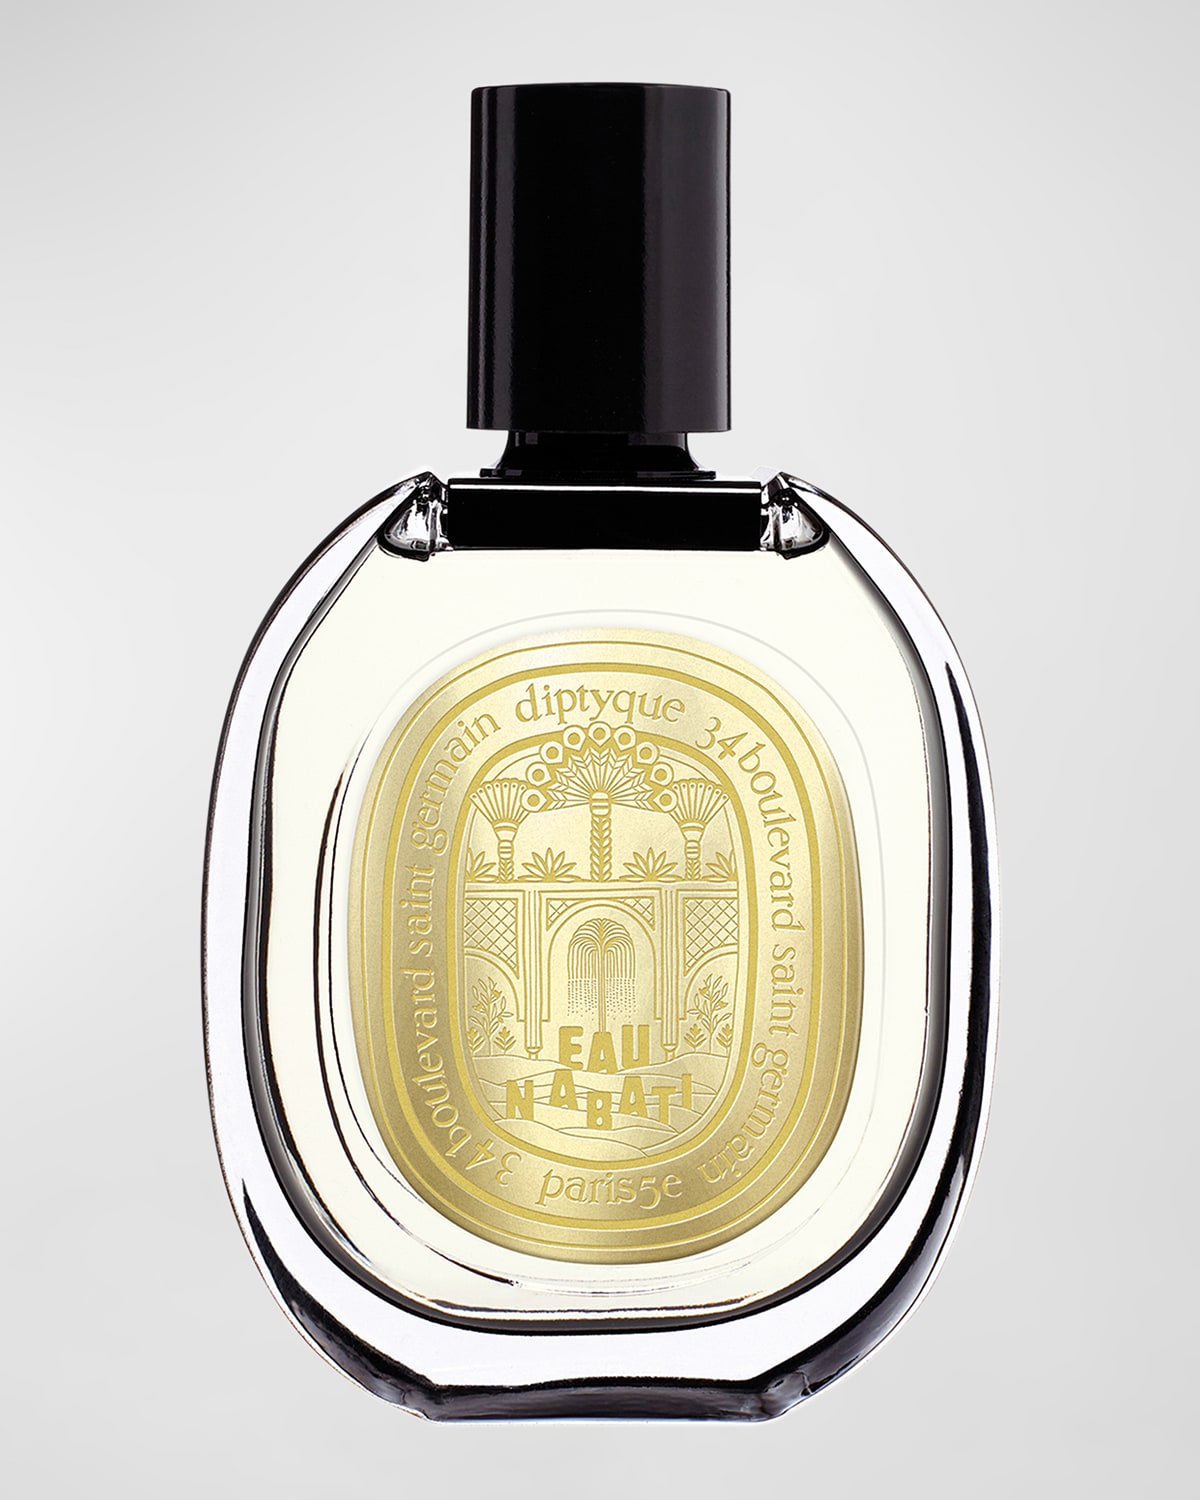 Diptyque Perfumes & Home Fragrances